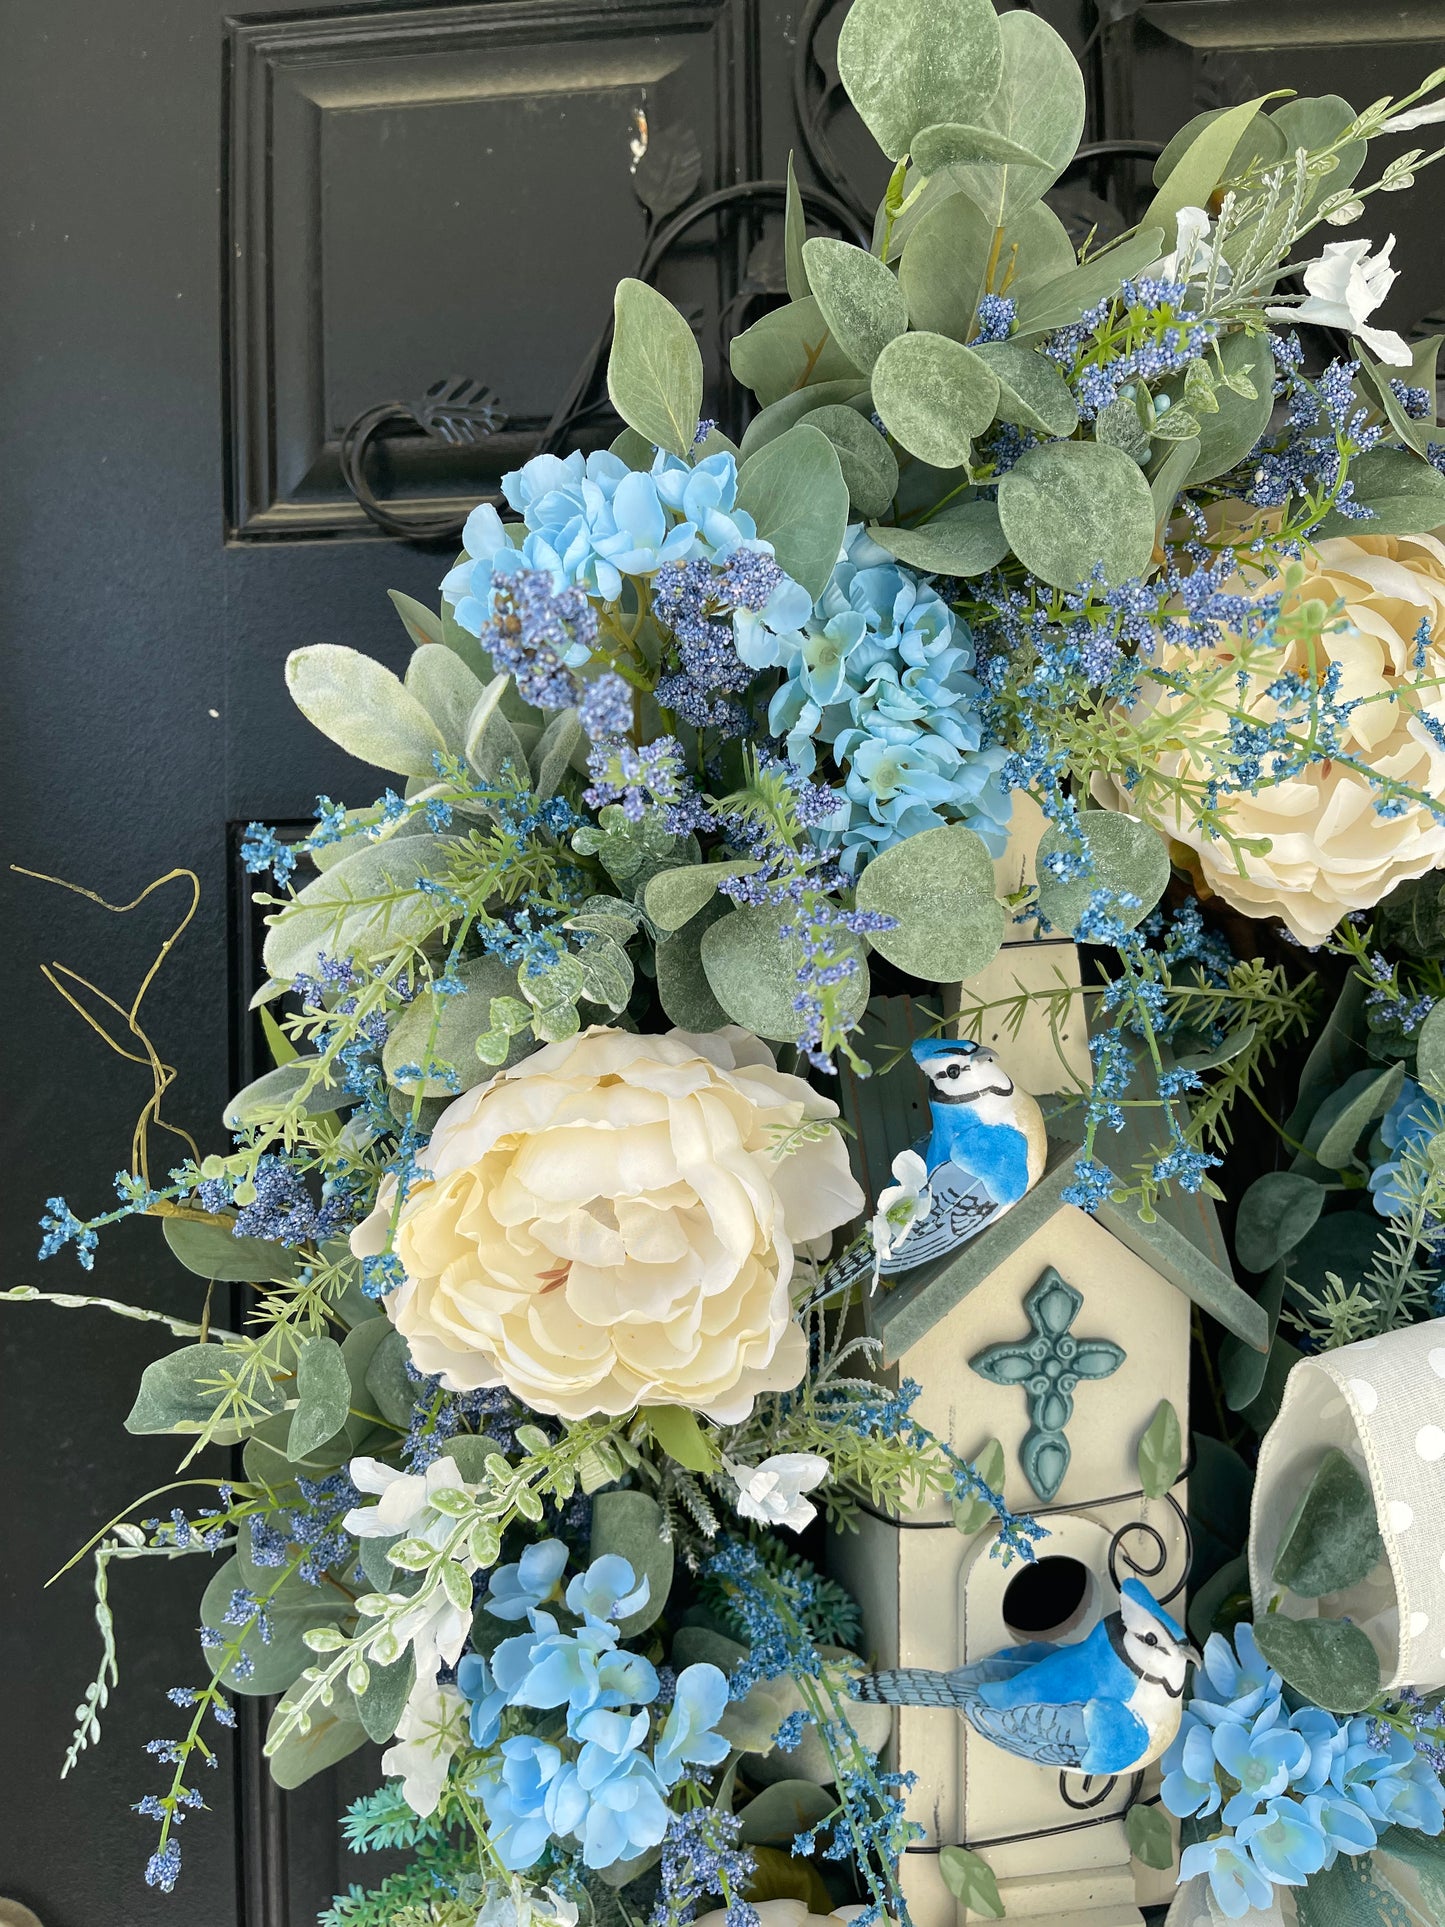 Bluejay Grapevine wreath